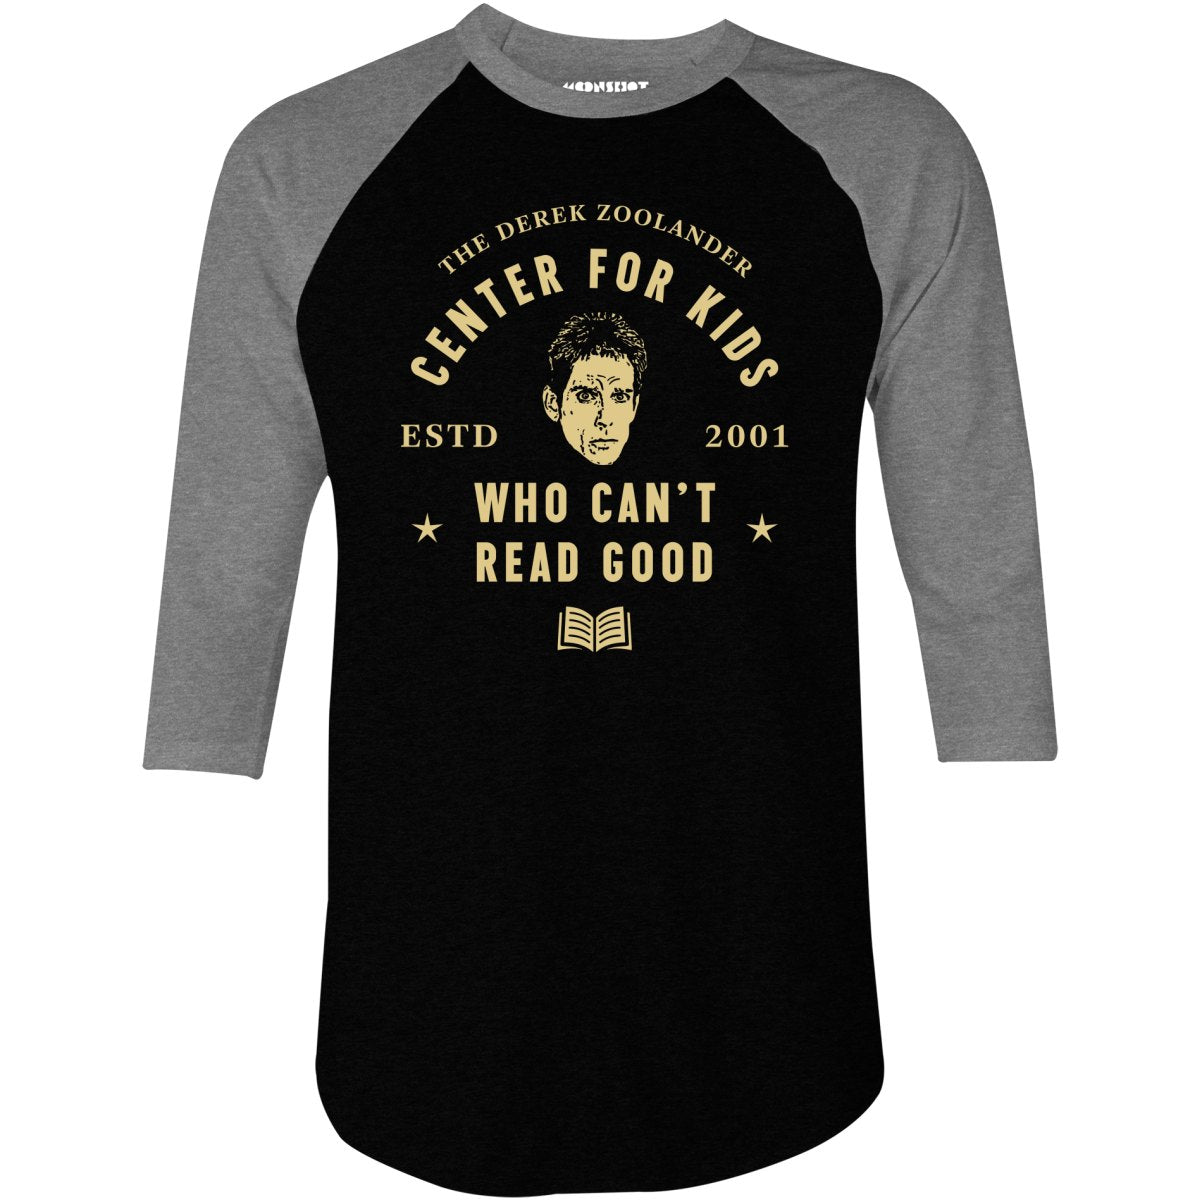 Derek Zoolander Center for Kids Who Can't Read Good - 3/4 Sleeve Raglan T-Shirt